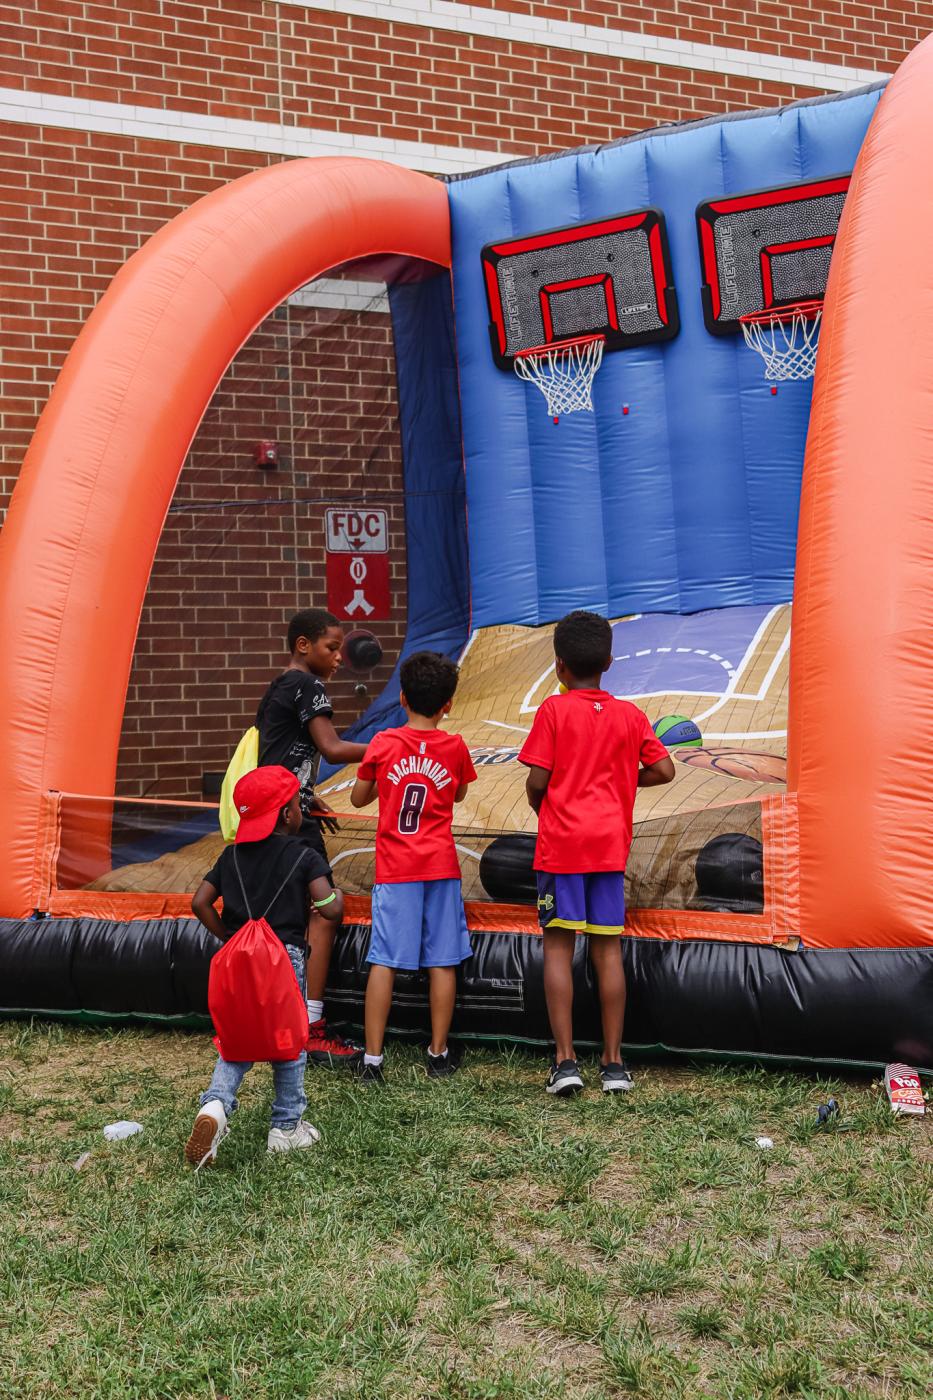 Kids shooting on blow-up basketball hoops